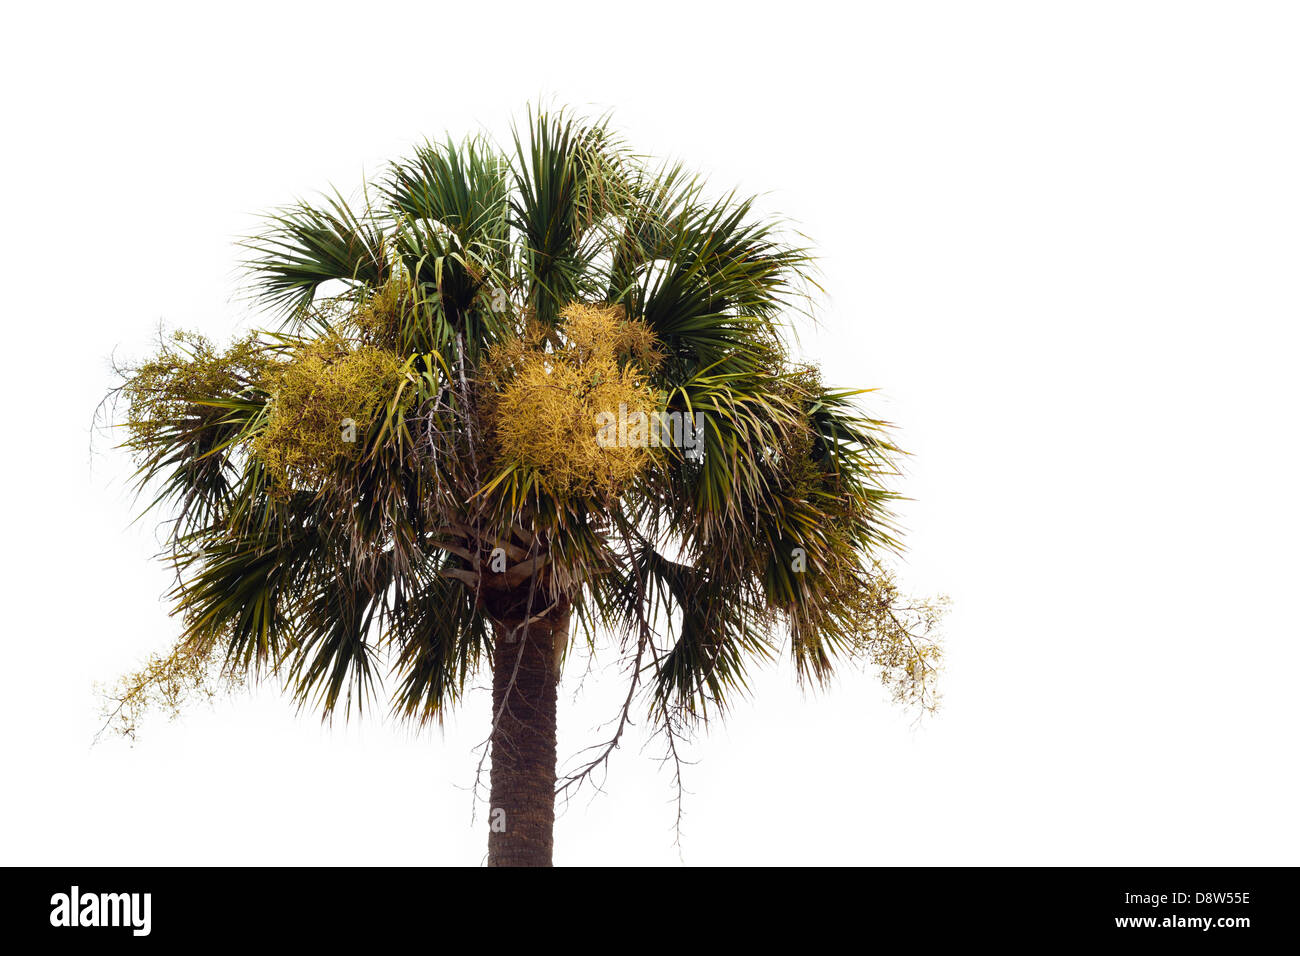 A single unkept flowering Palmetto tree (Sabal palmetto) against a white background. Stock Photo